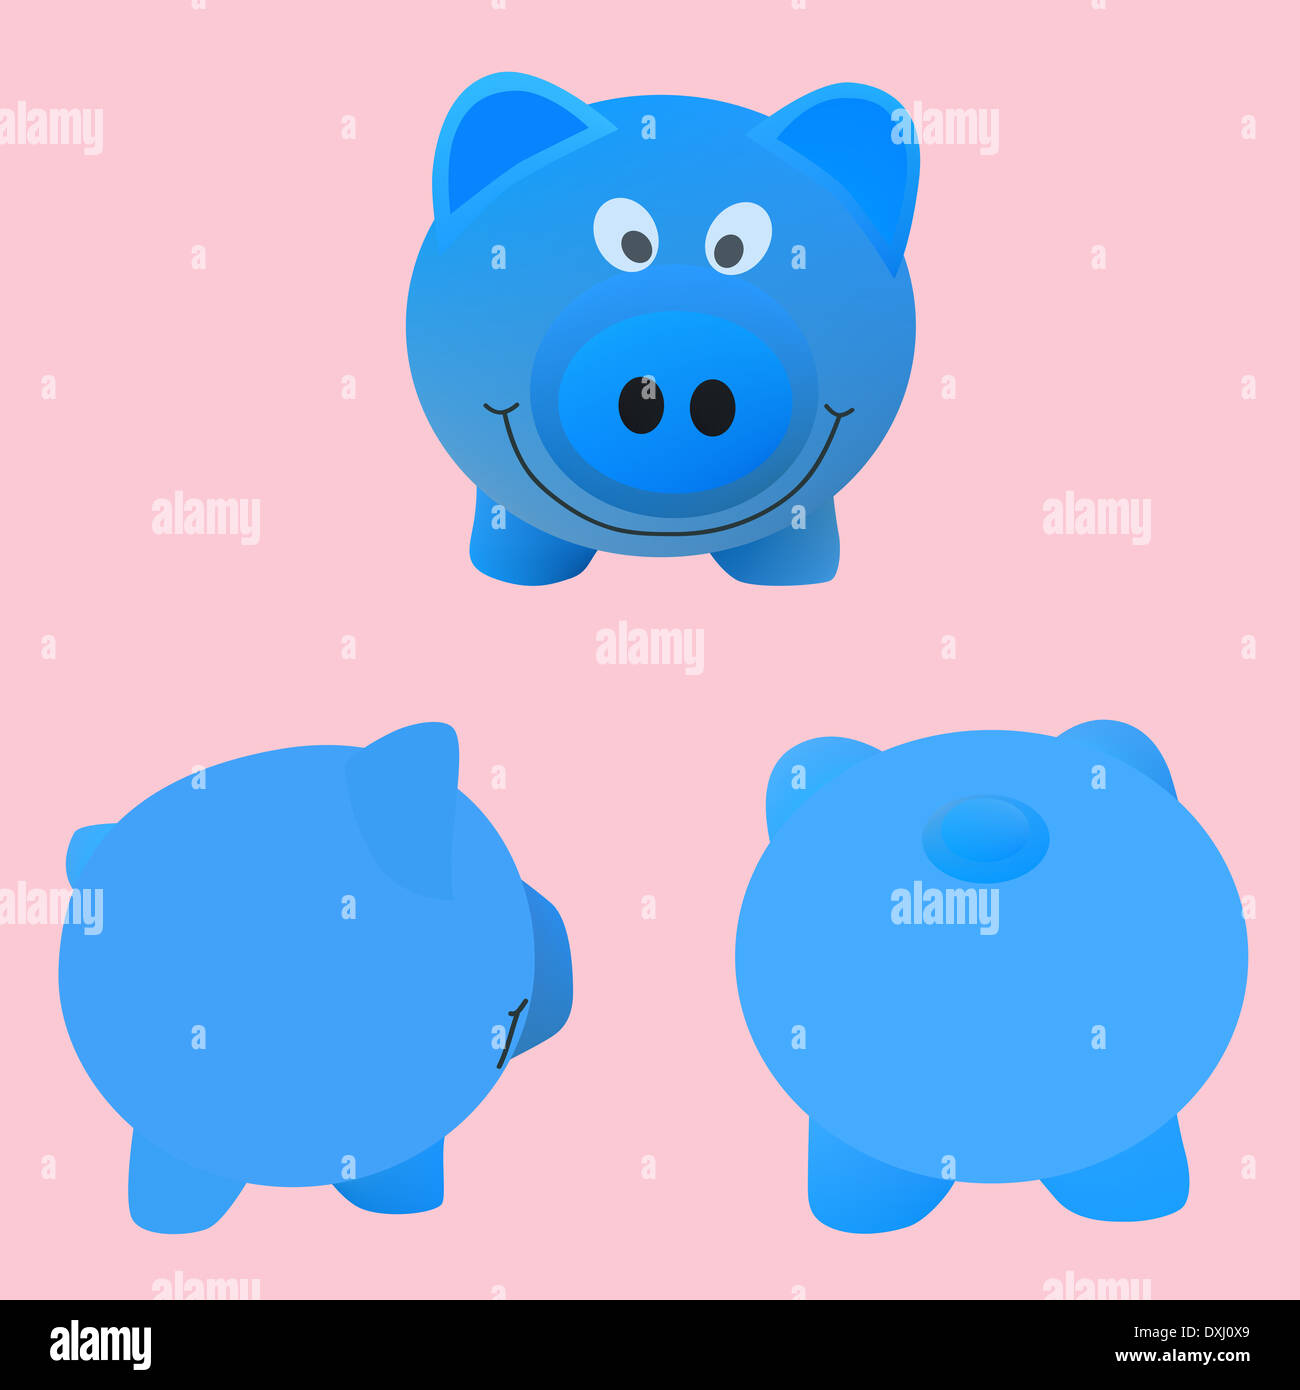 Illustration of cute cartoon blue pigs Stock Photo